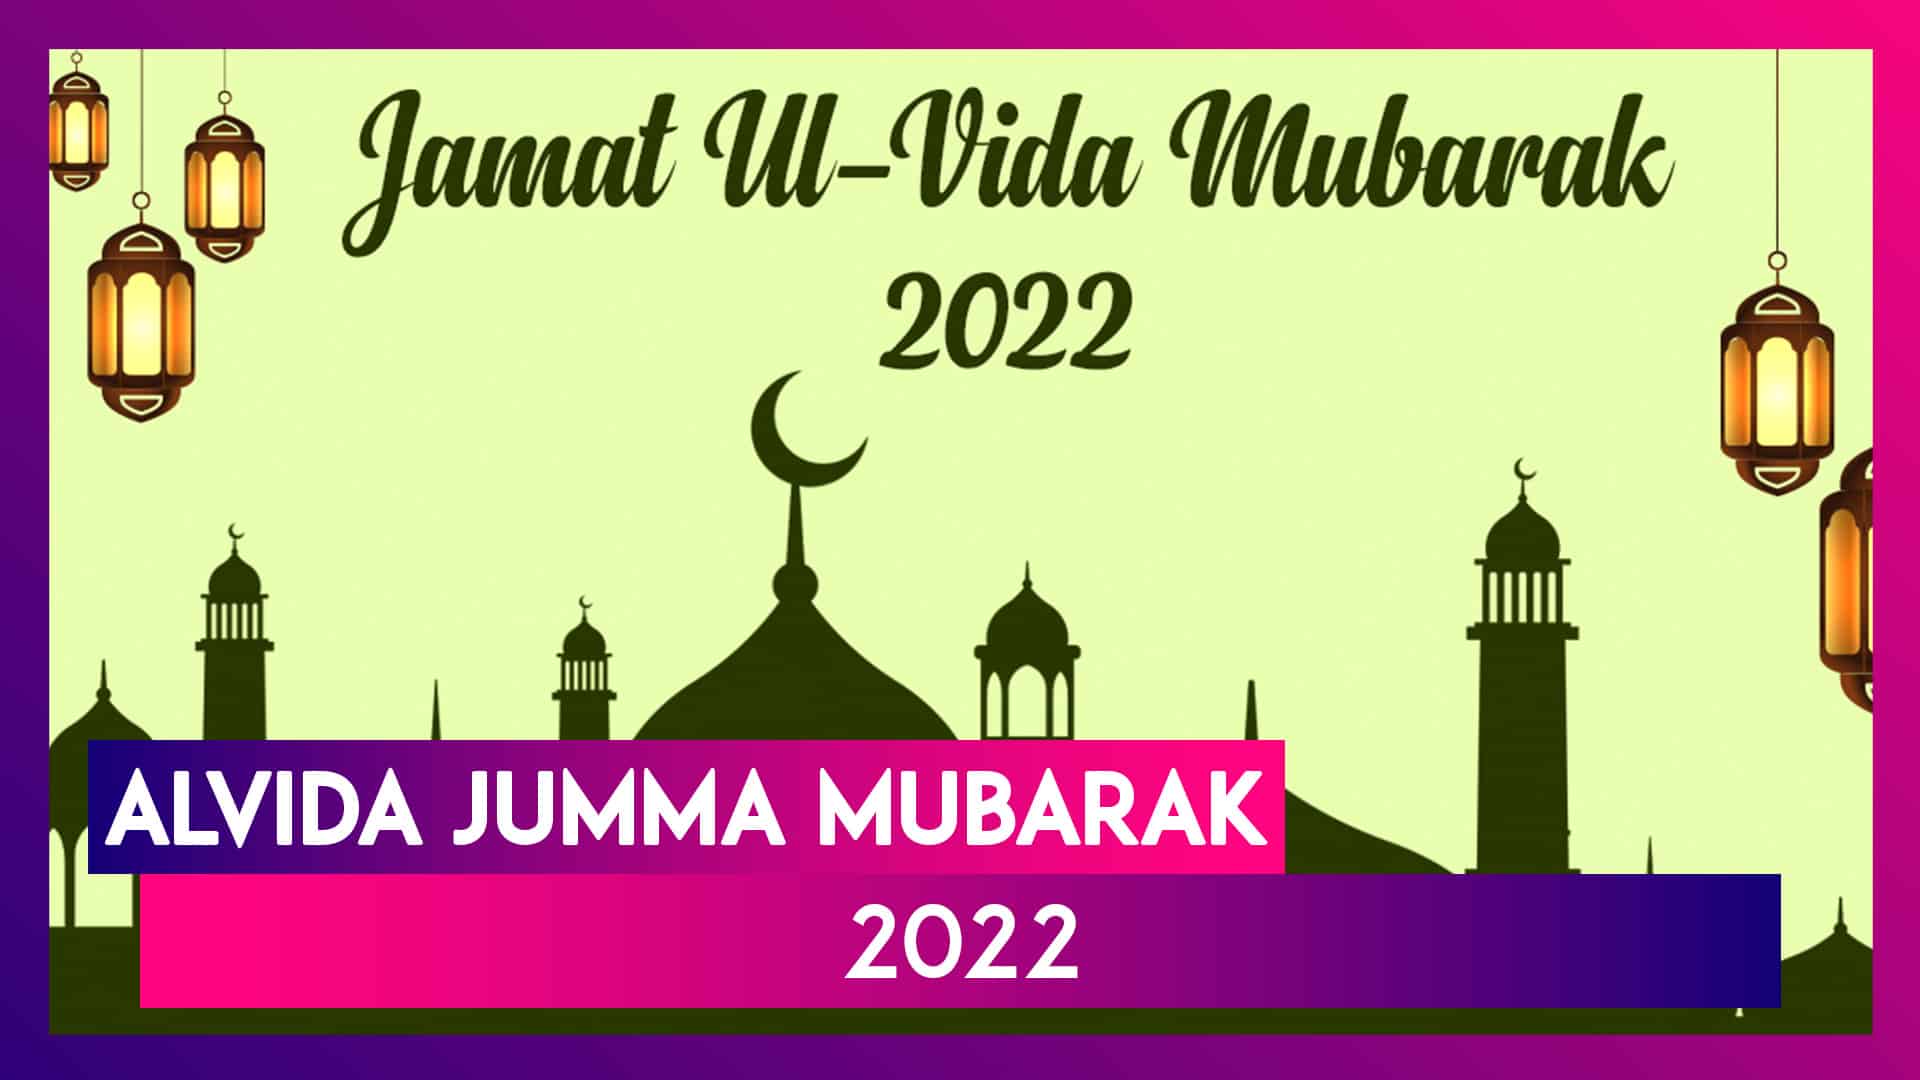 Alvida Jumma 2022 Mubarak Wishes & Images